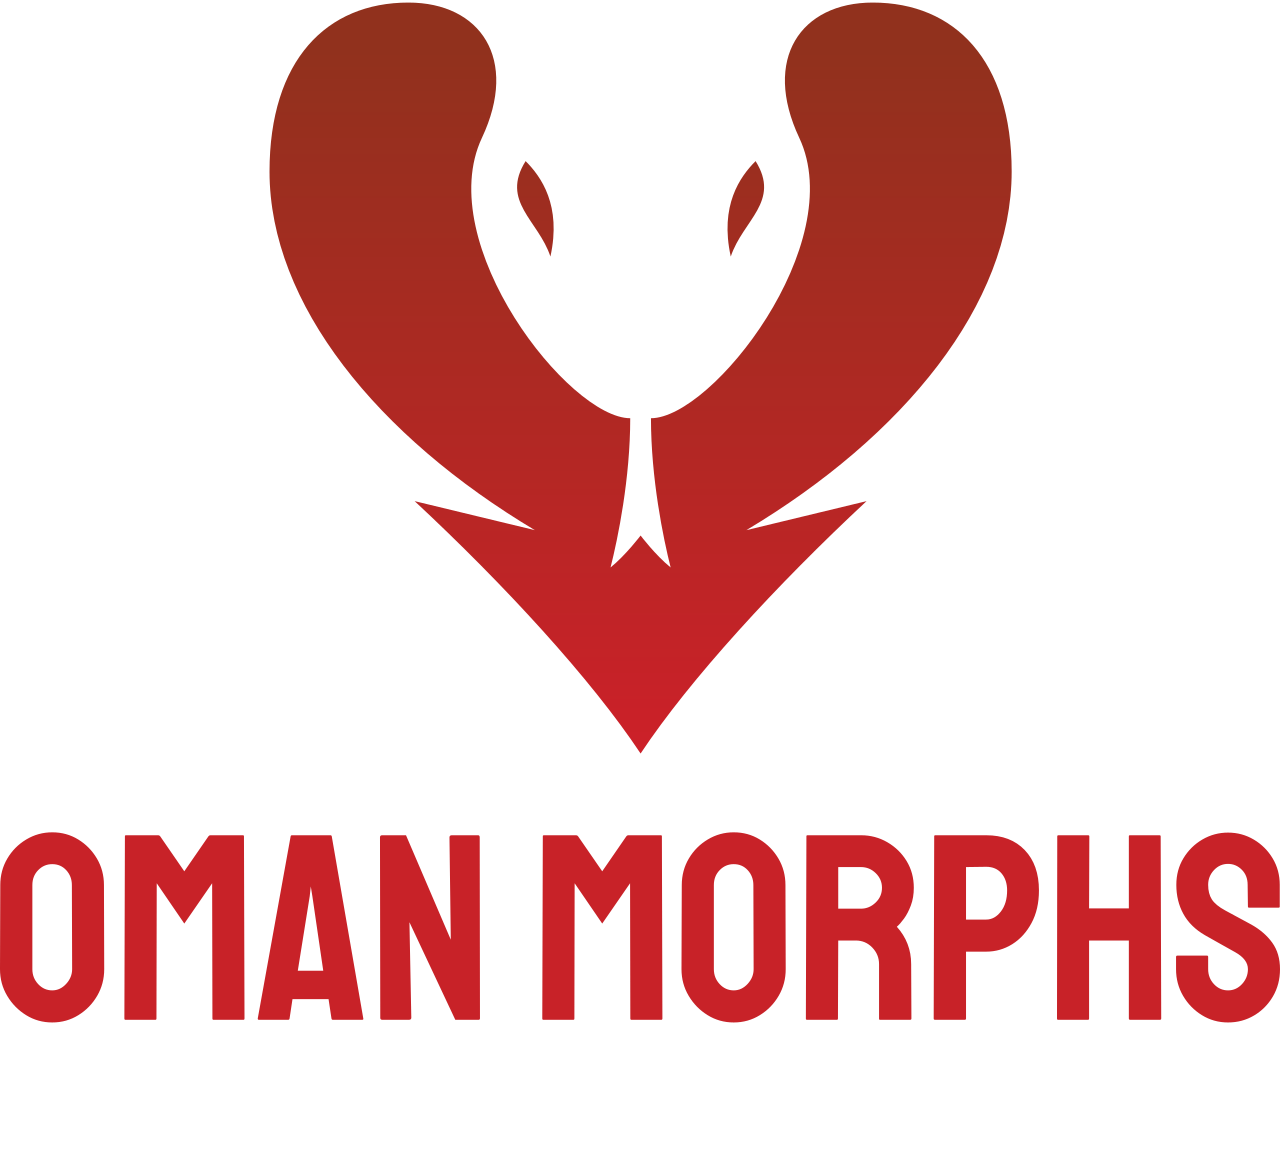 Oman Morphs's web page